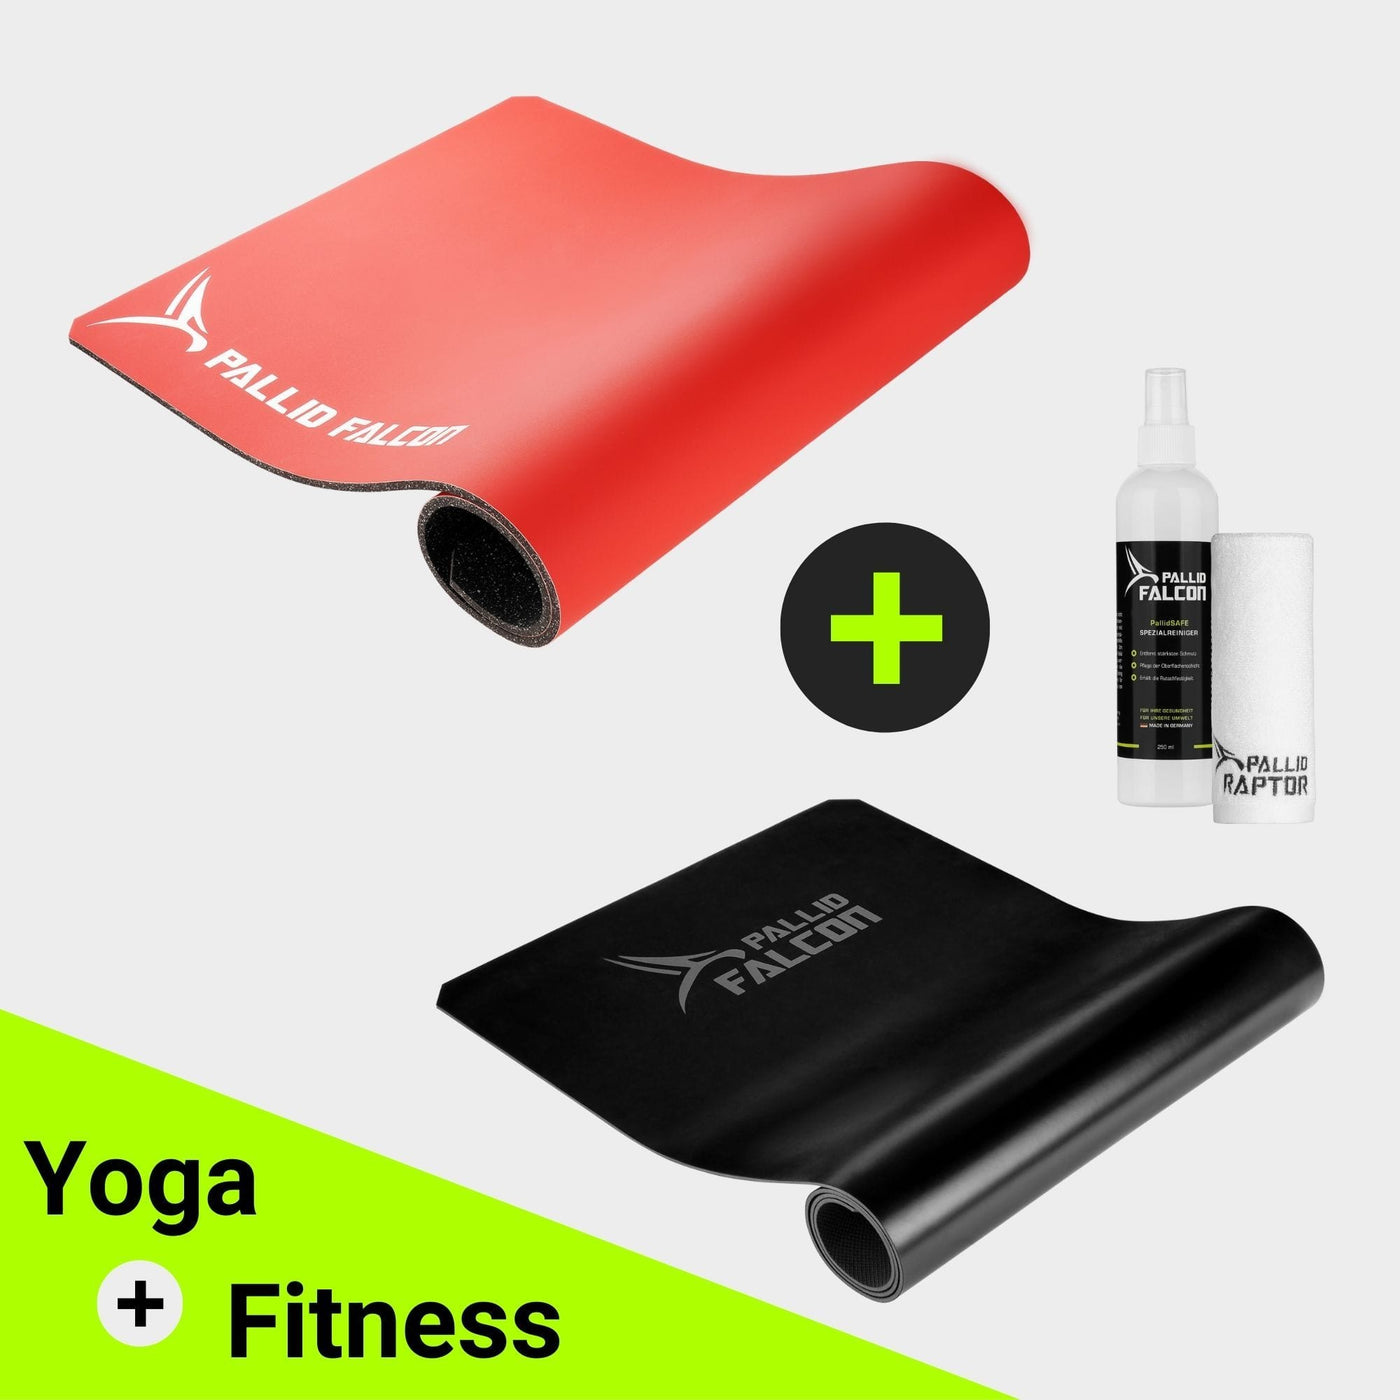 Yoga + Fitness Set